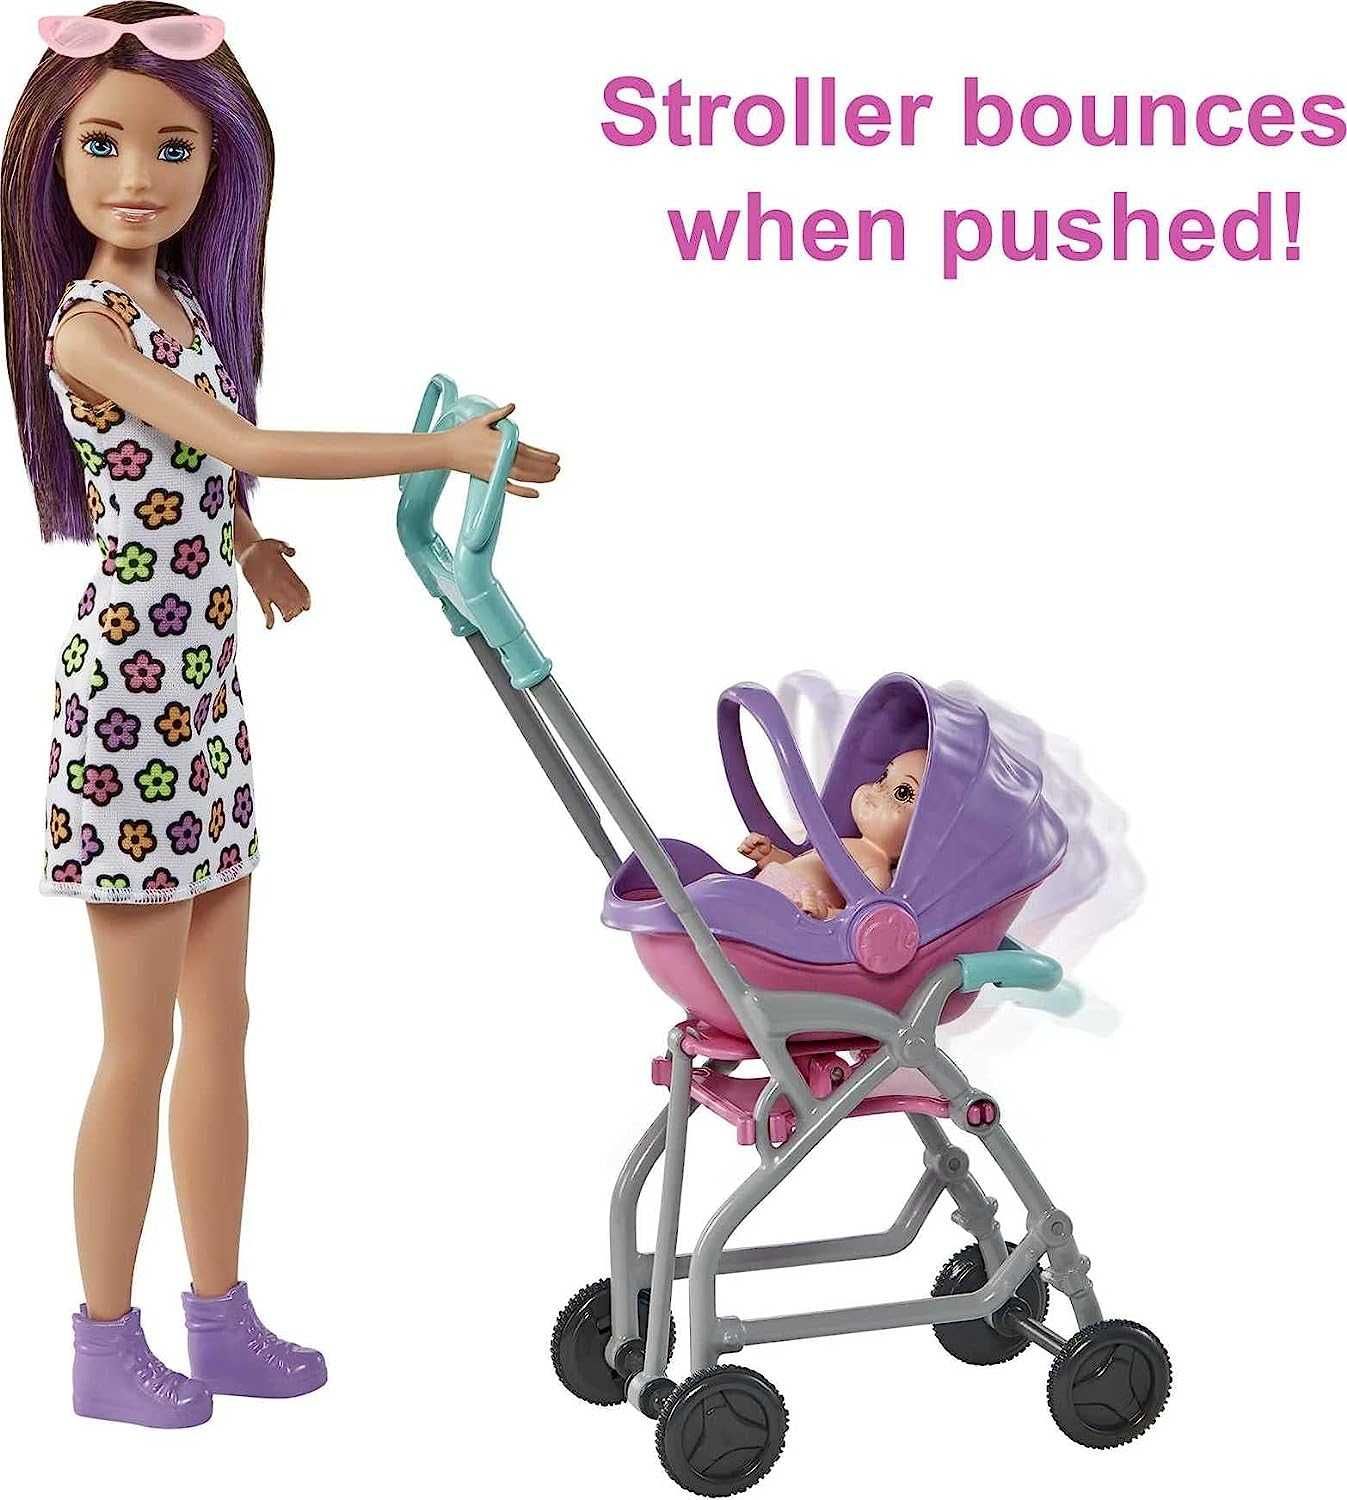 ОРИГИНАЛ! Кукла Барби Скиппер Няня с коляской и пупсом Barbie Skipper